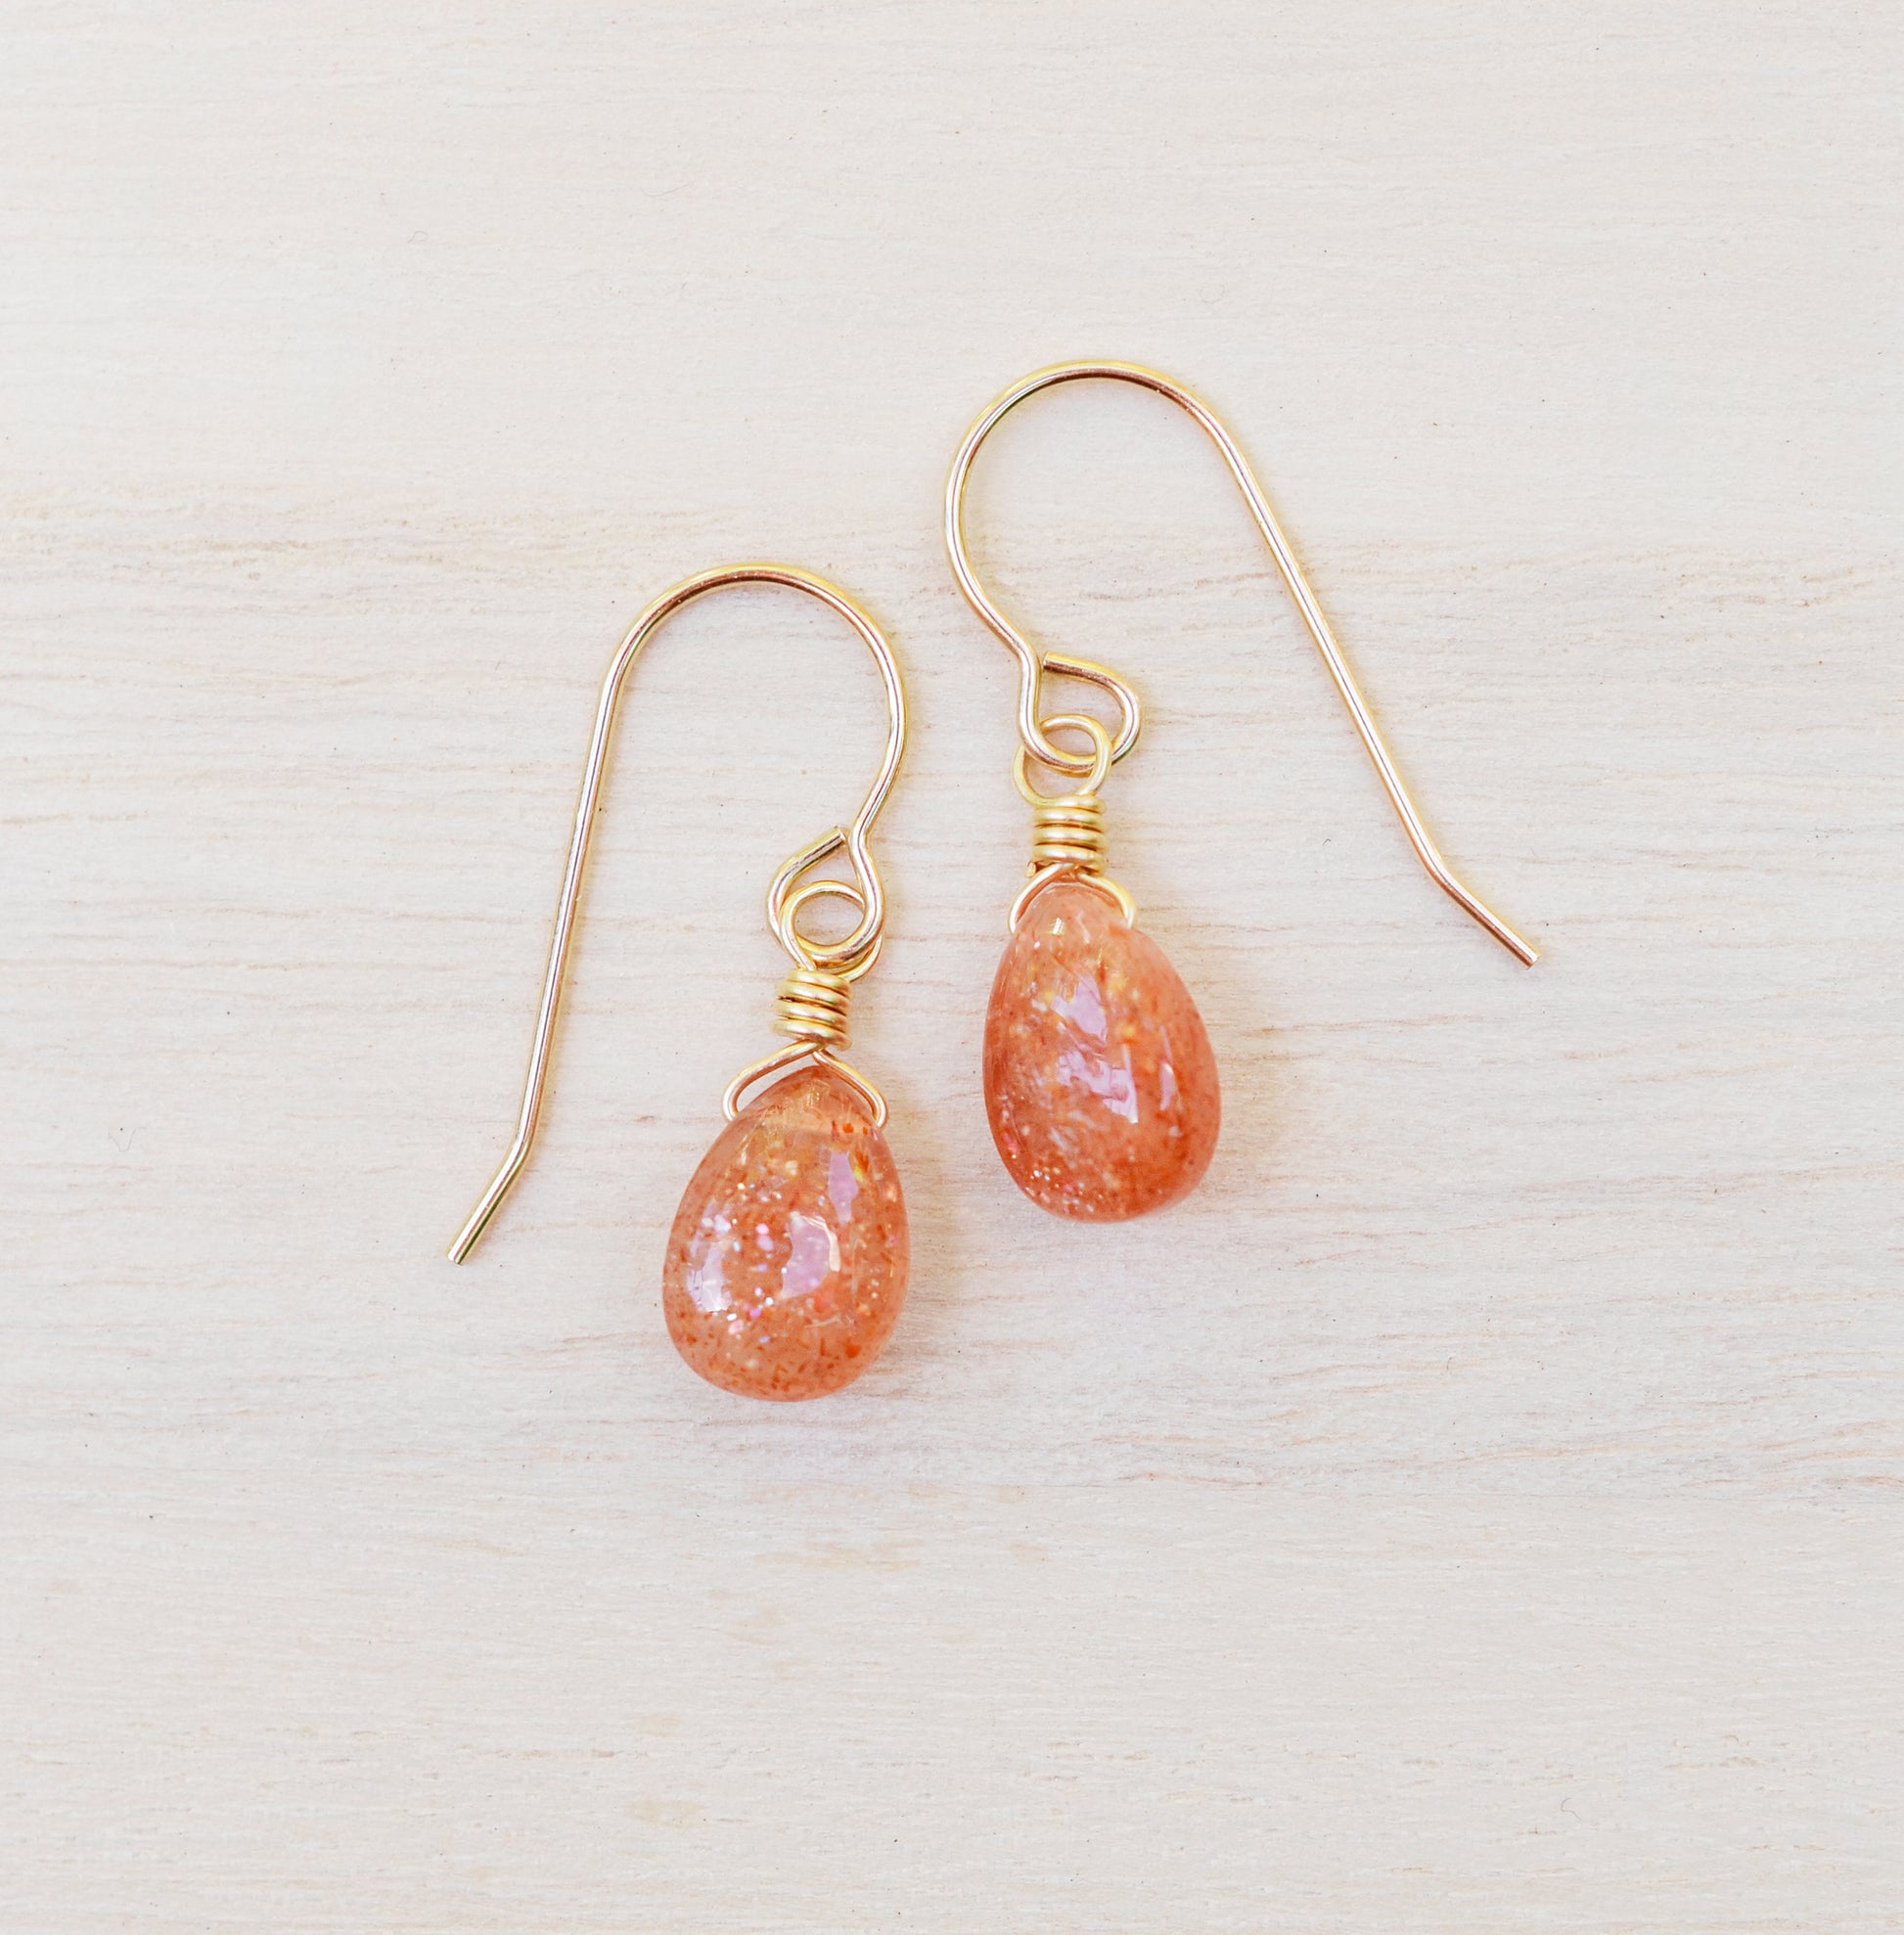 Genuine orange sunstone teardrop dangle earrings shown in 14k gold filled. The gemstones are smooth polished.